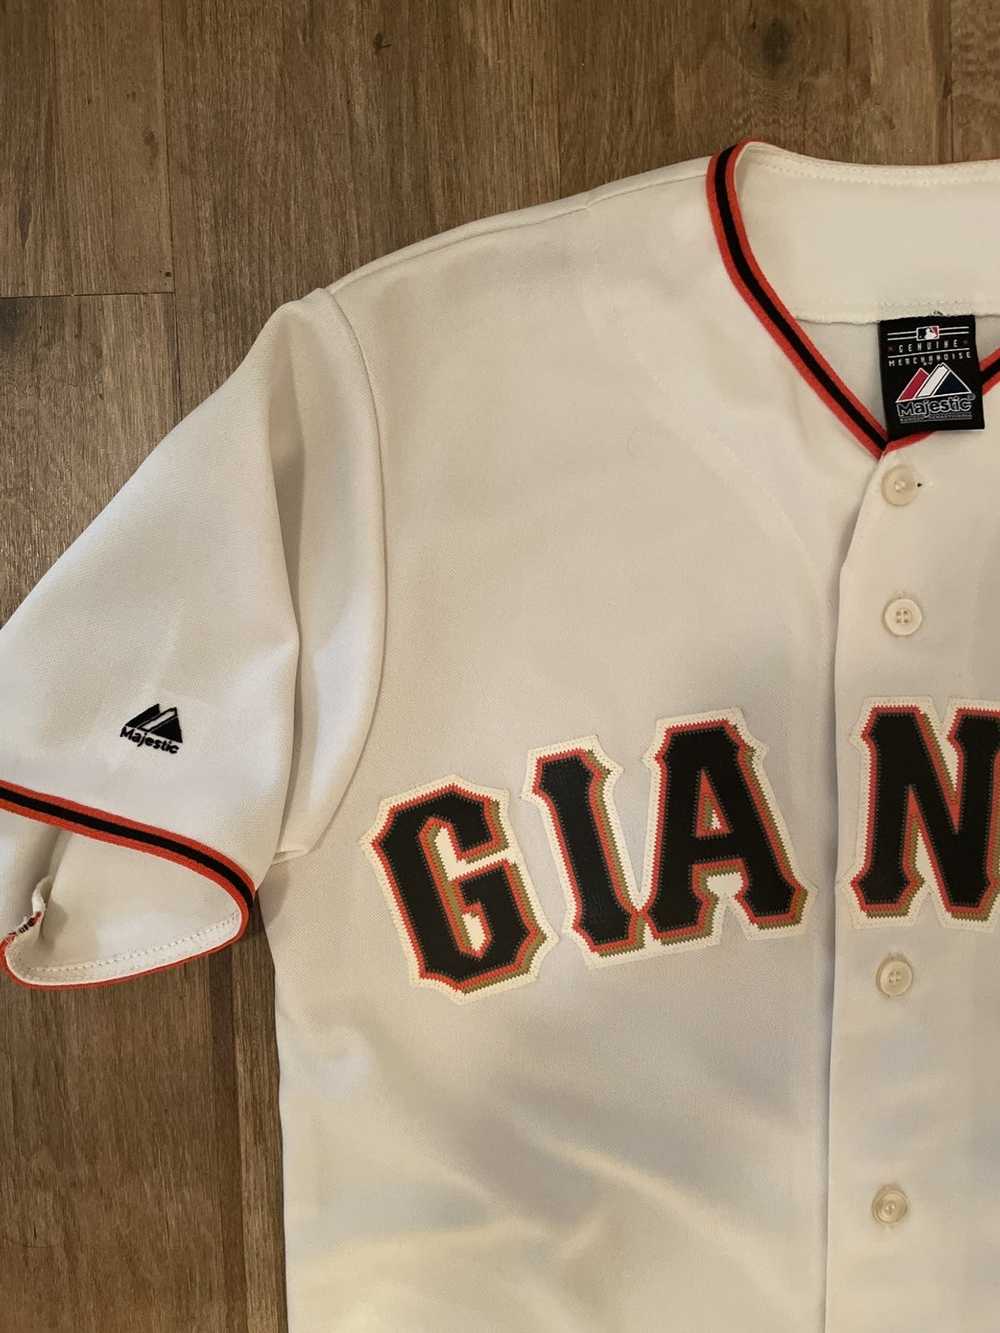 San Francisco Giants #28 Buster Posey Shirt Adult Medium Black